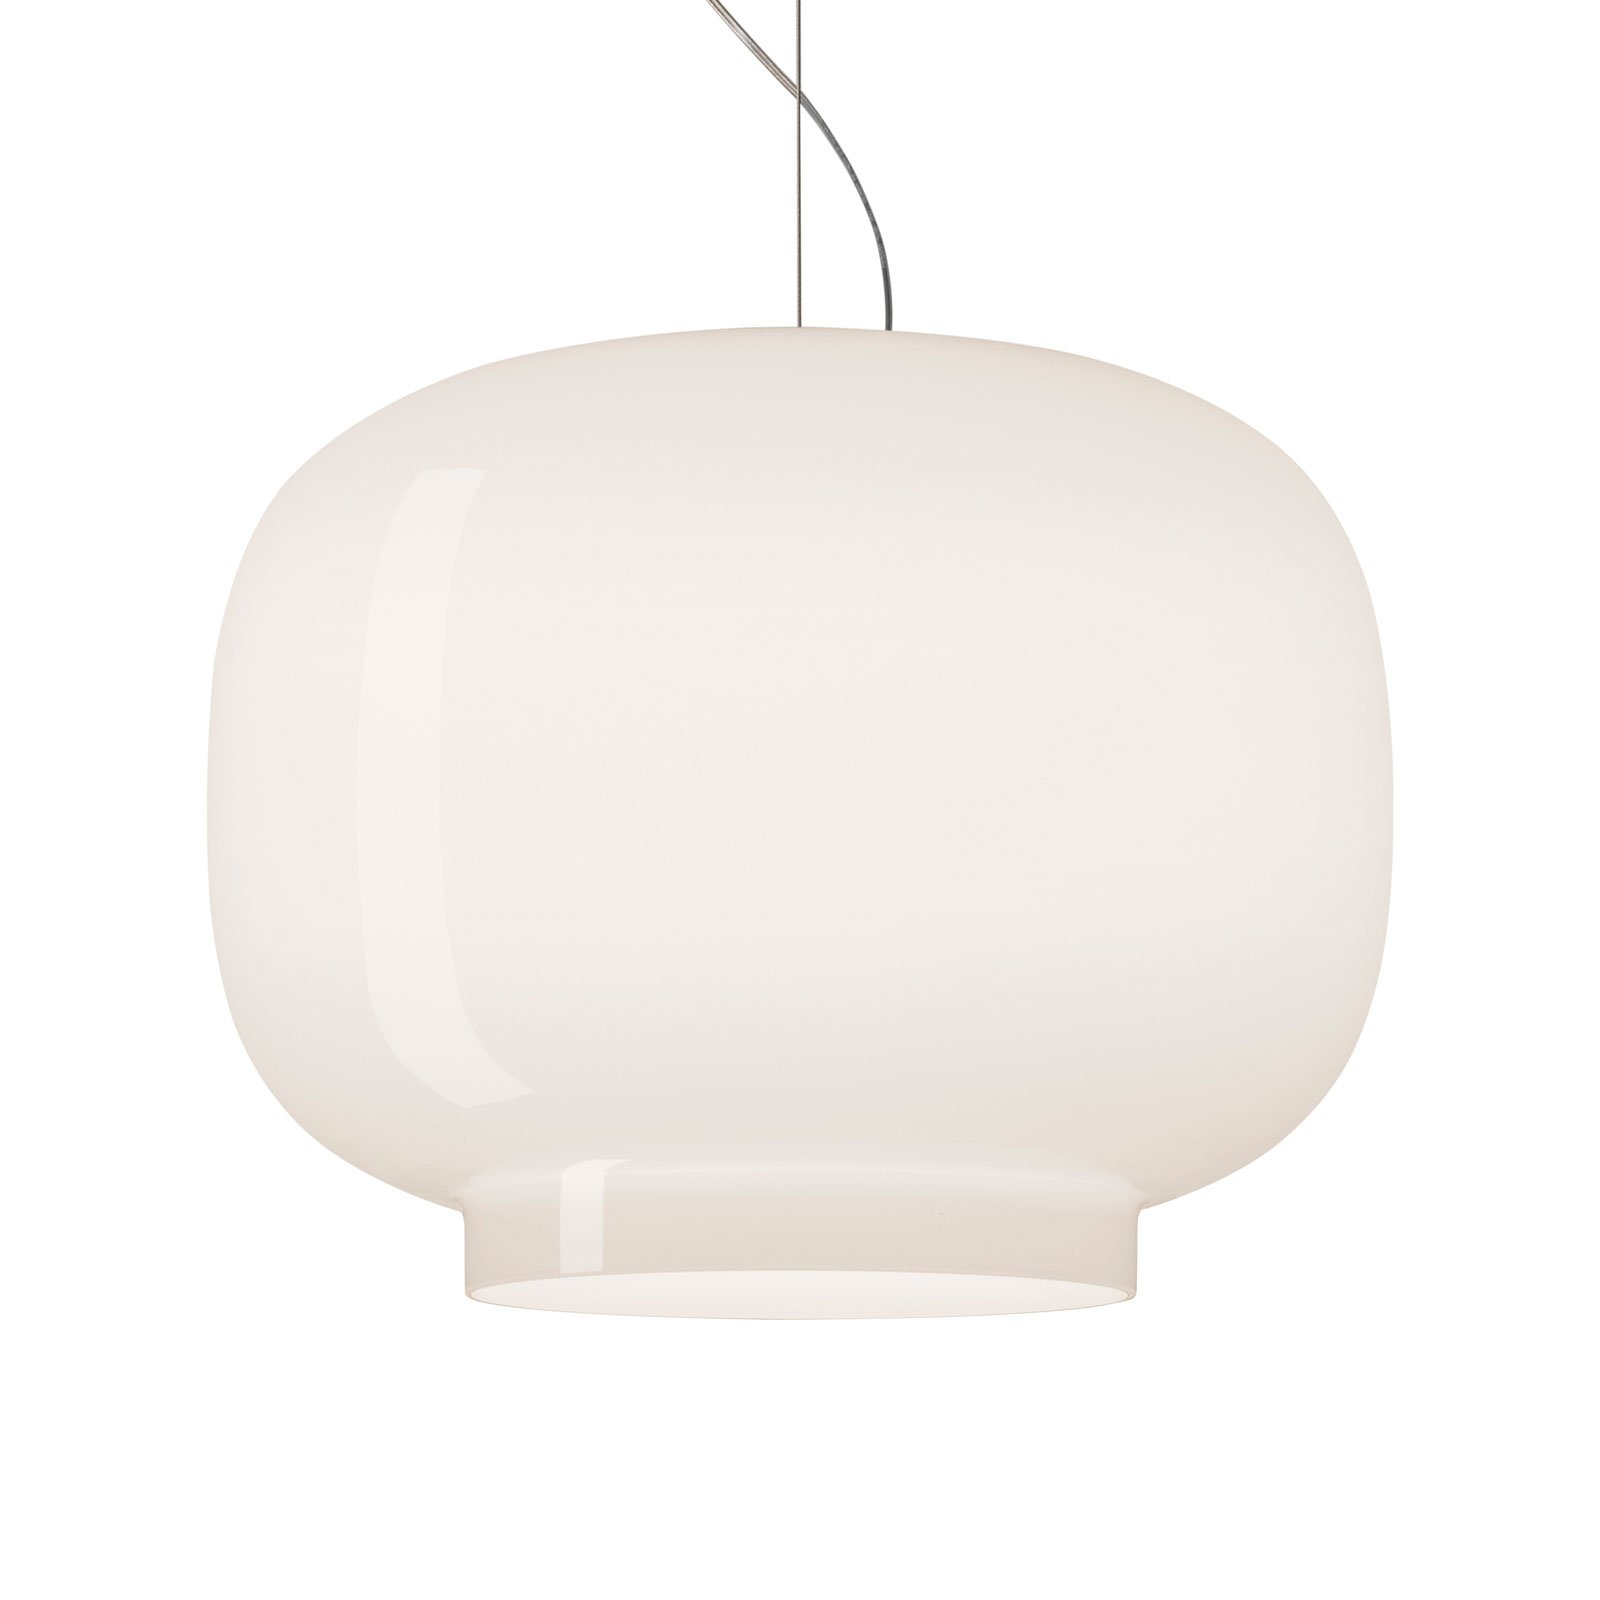 Foscarini Chouchin Bianco 1 lampada a sospensione LED on/off